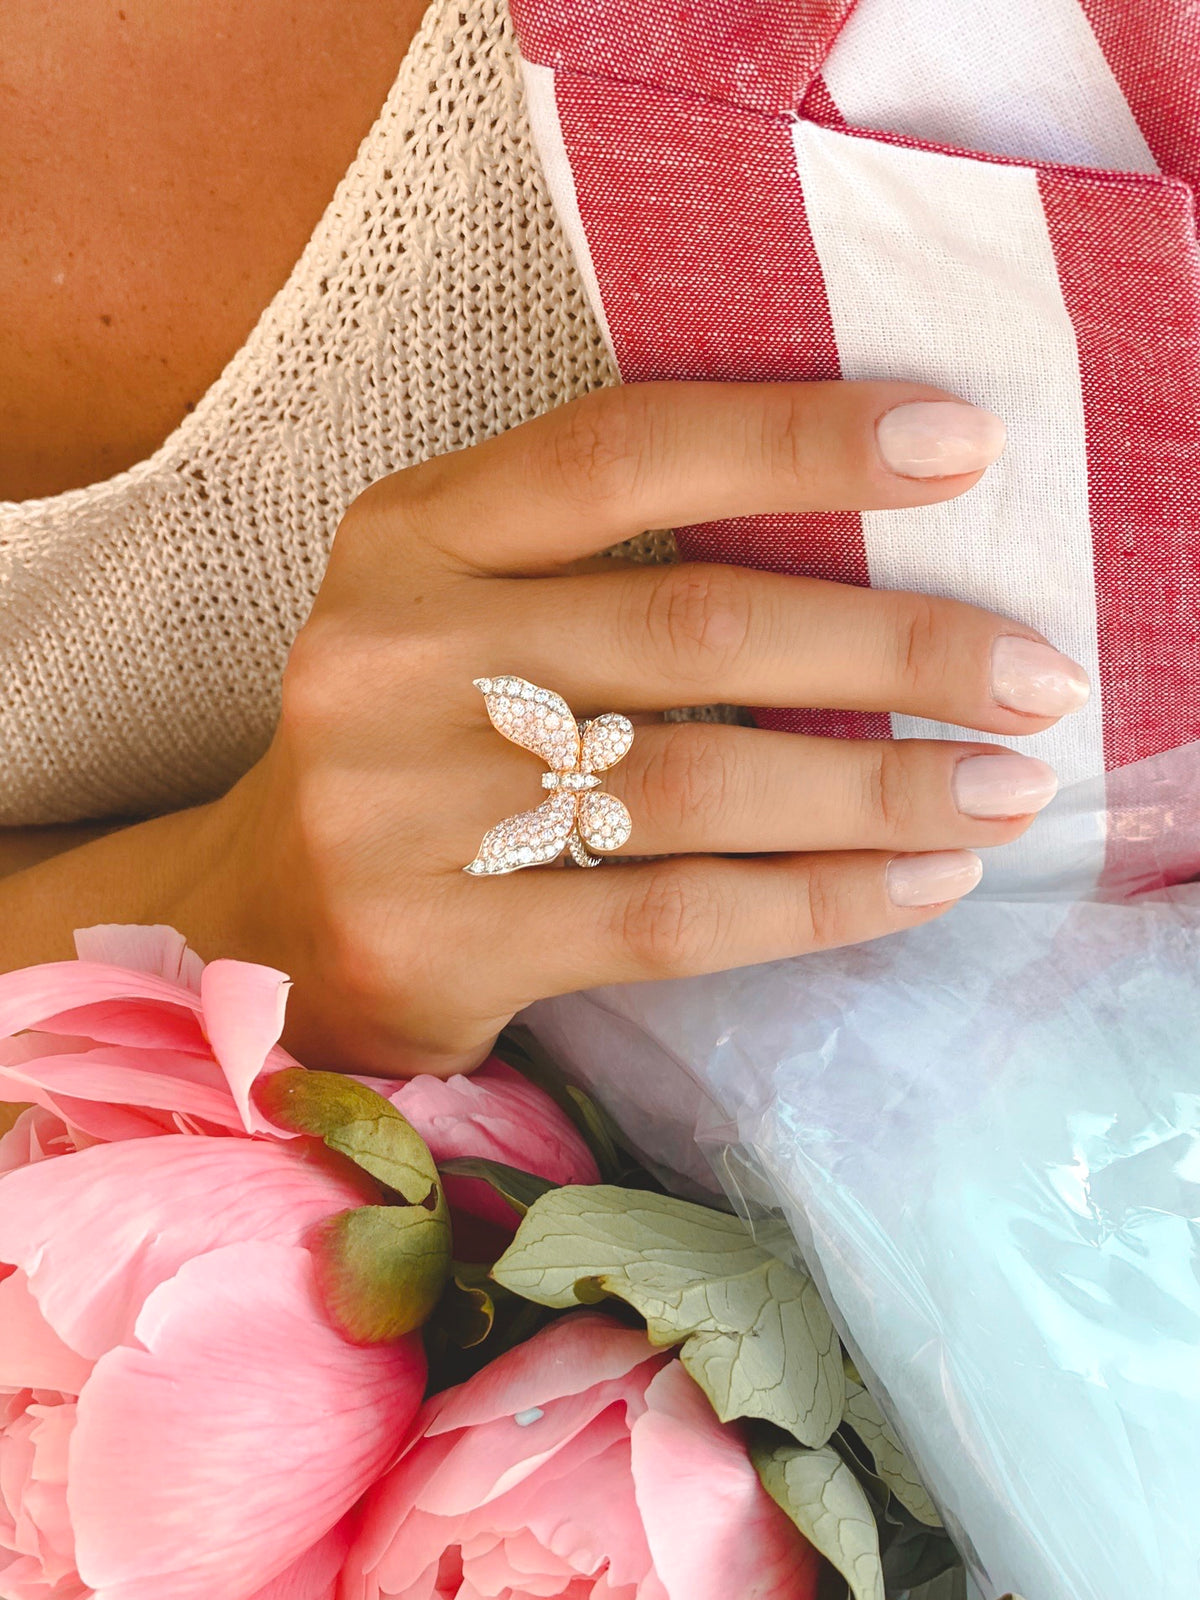 Mariposa Argyle Pink & White Diamond Platinum Ring